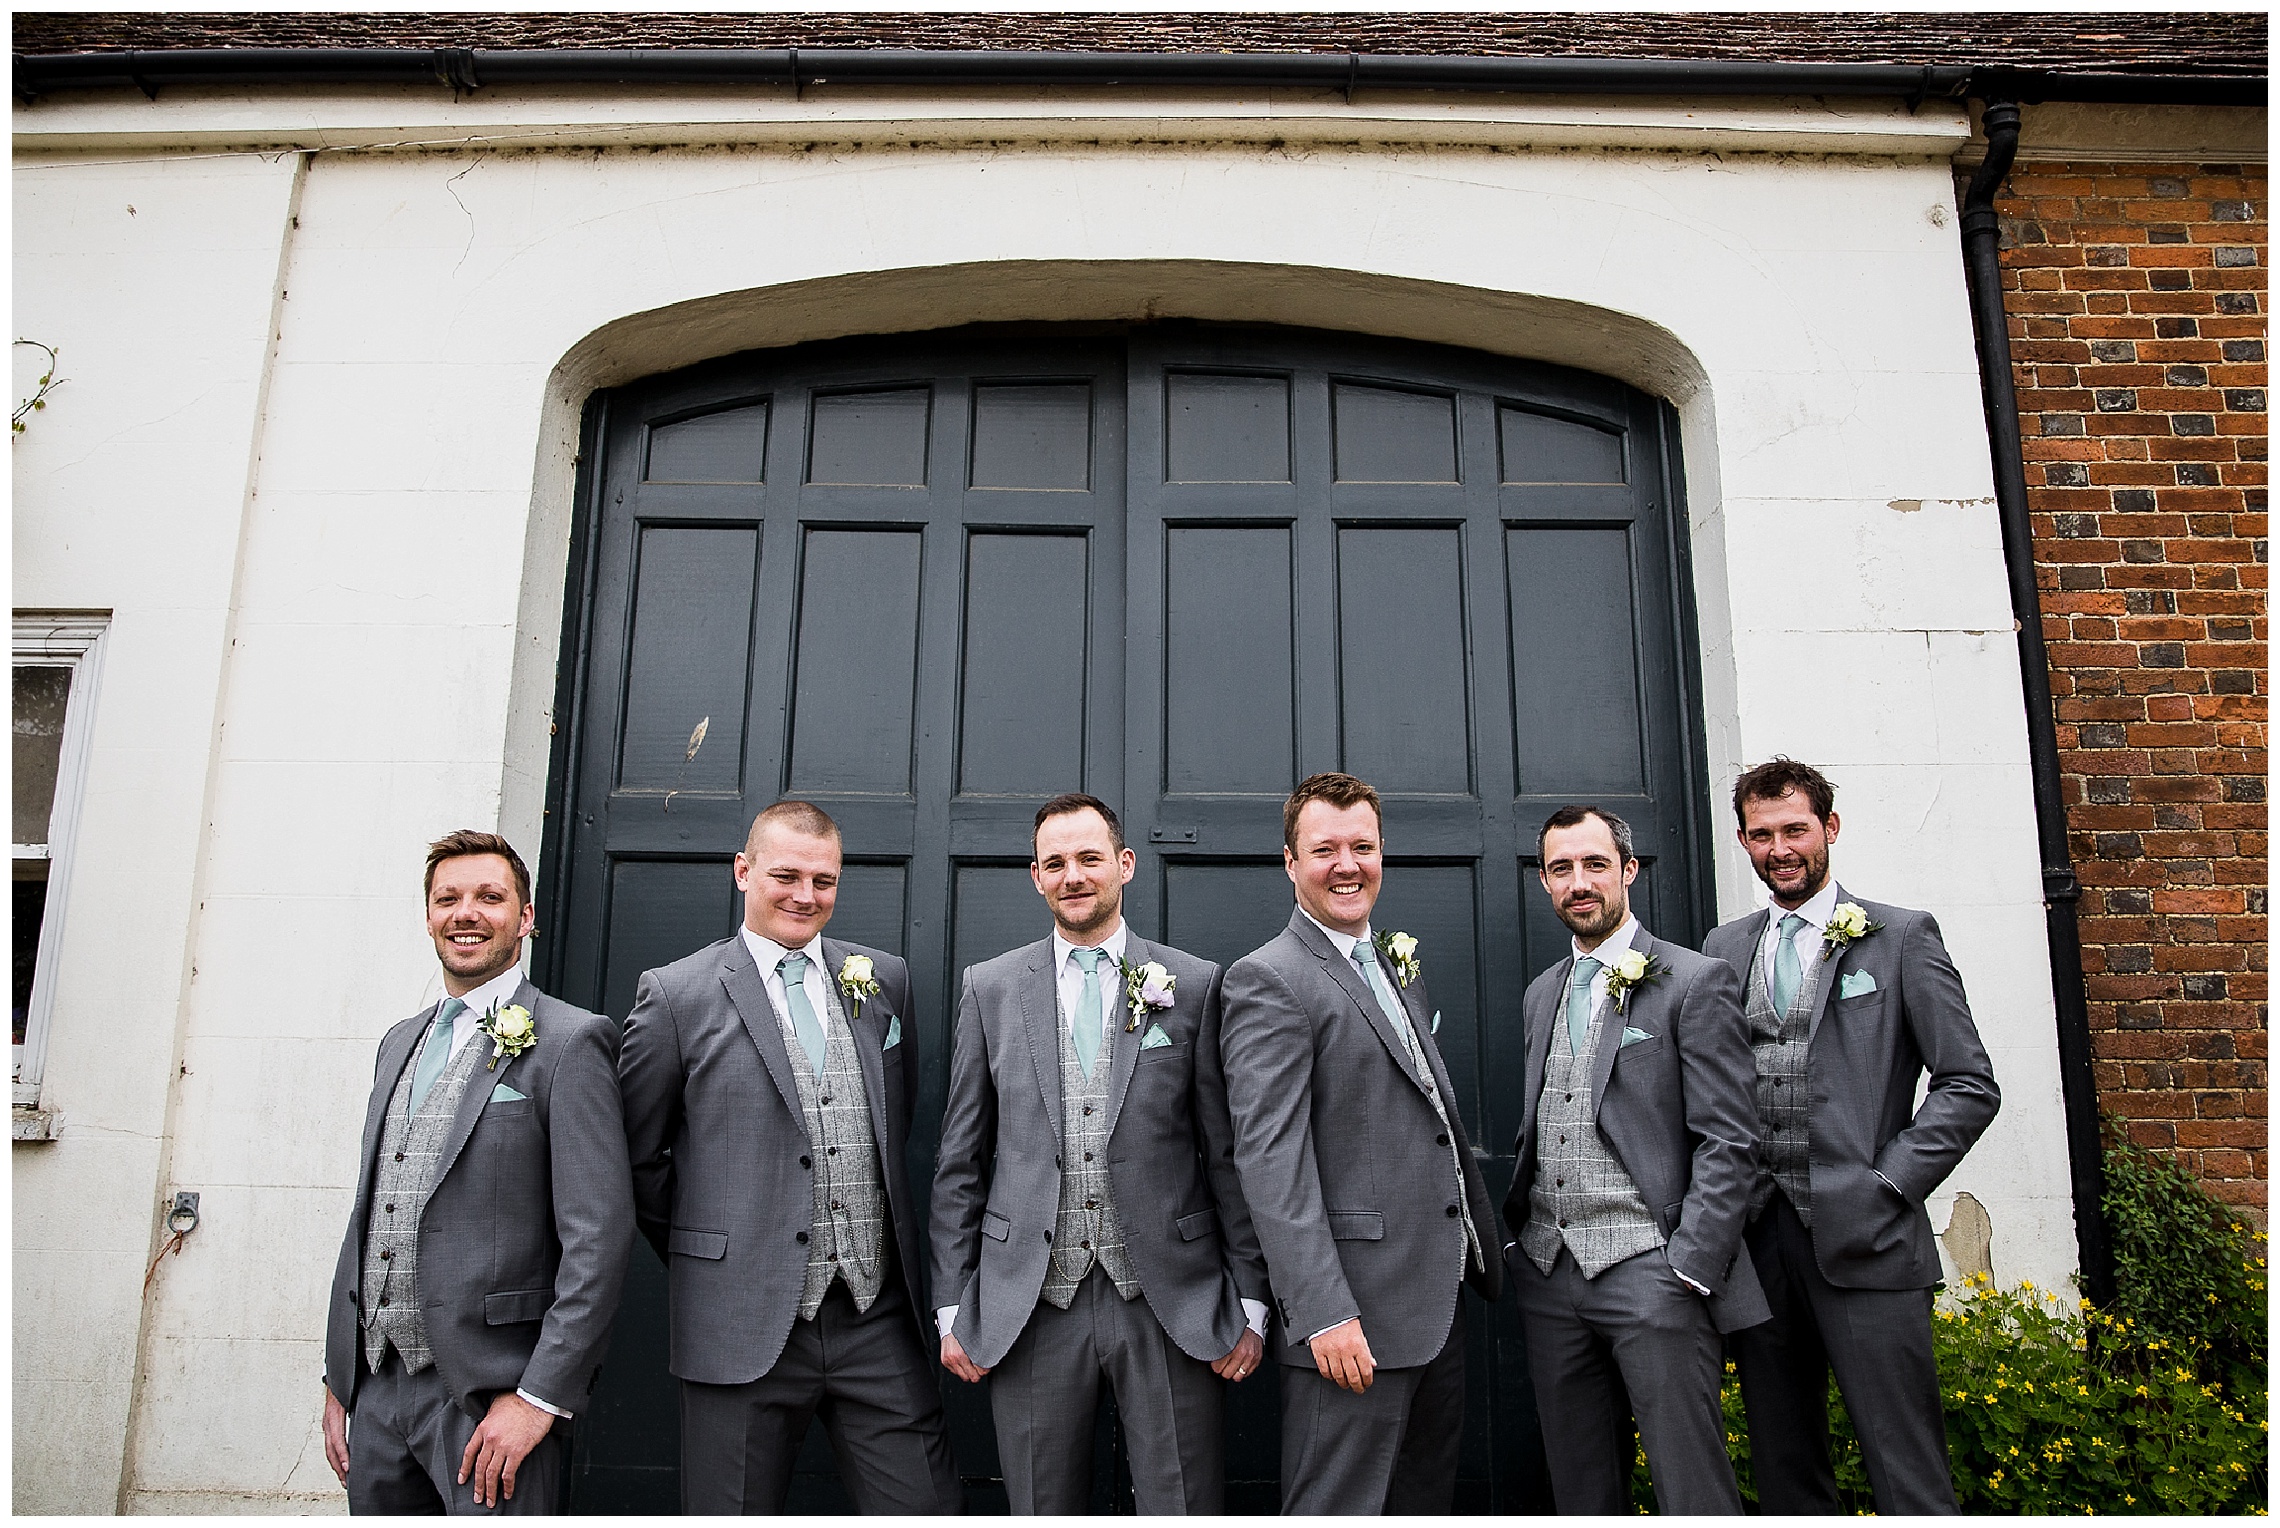 Groomsmen and groom in grey suits with mint ties